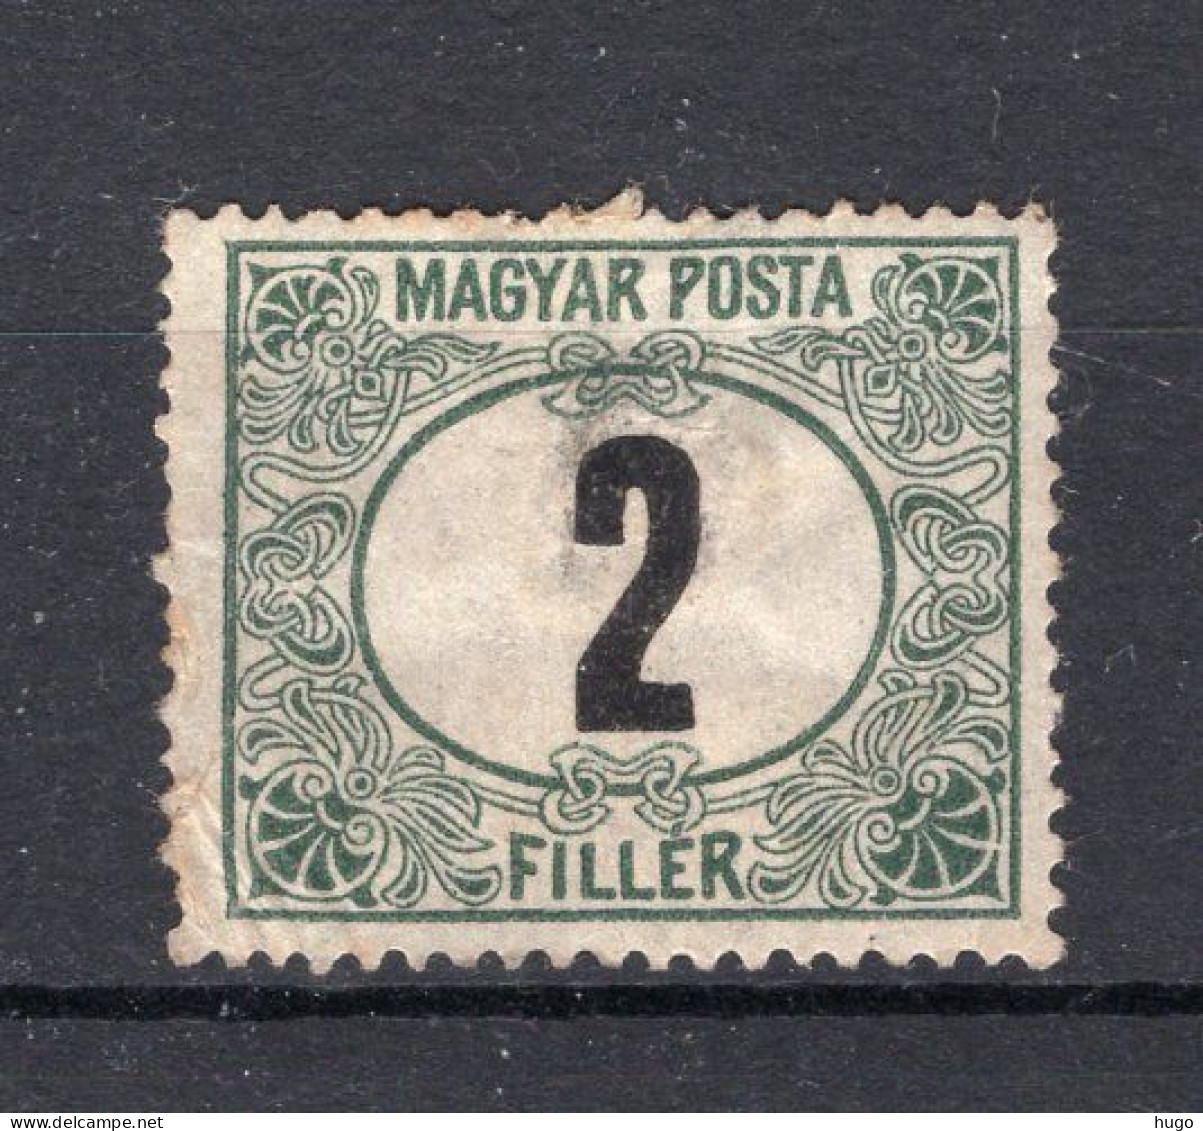 HONGARIJE Yt. T54 MH Portzegels 1919-1920 - Portomarken